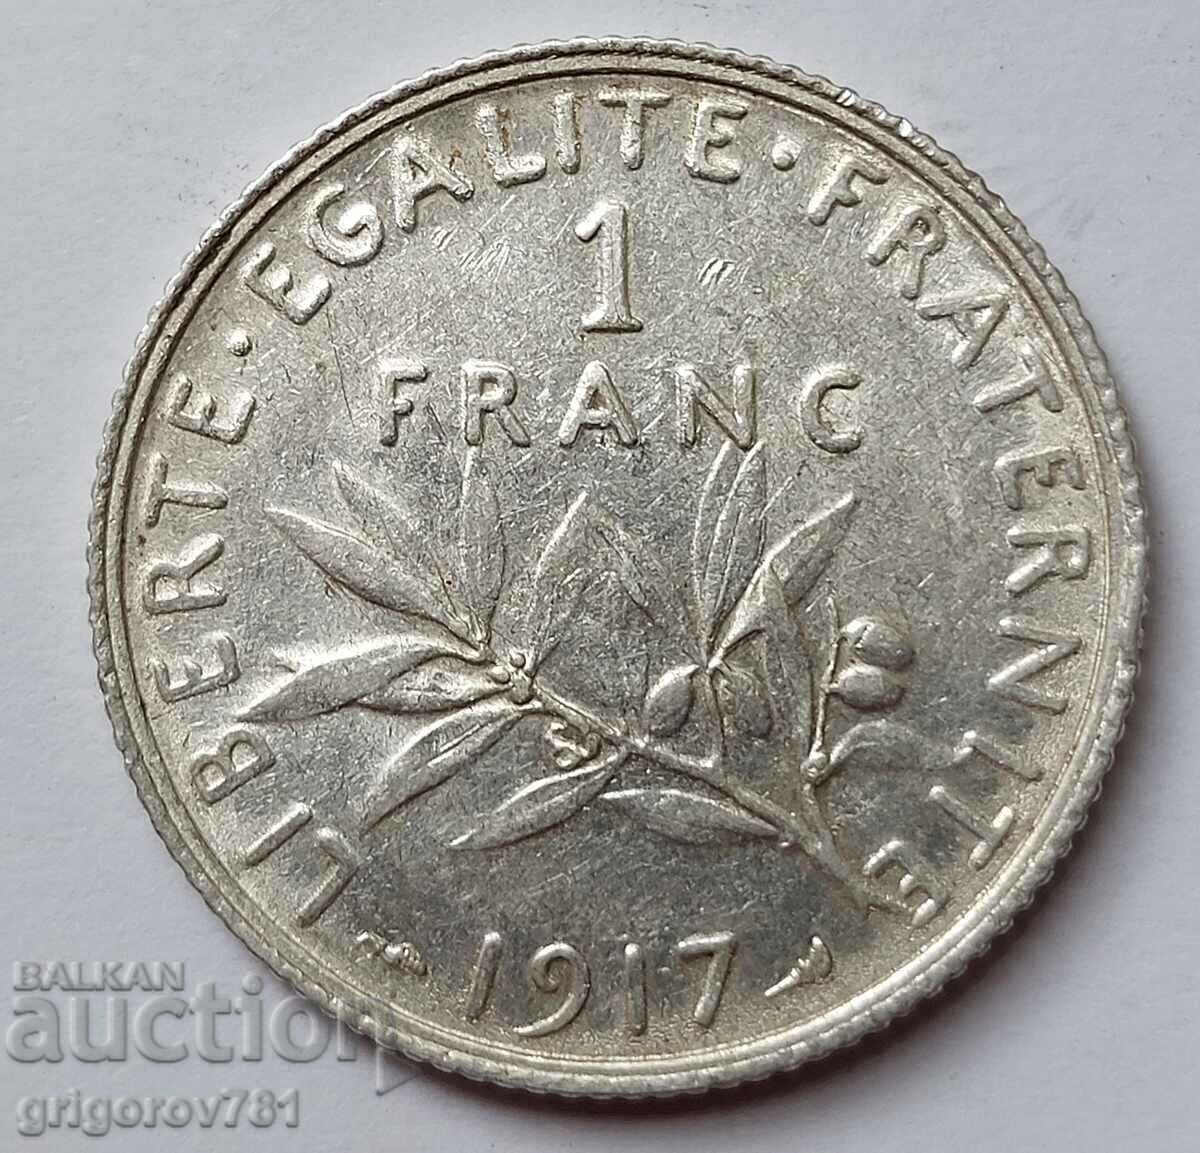 1 franc silver France 1917 - silver coin №15